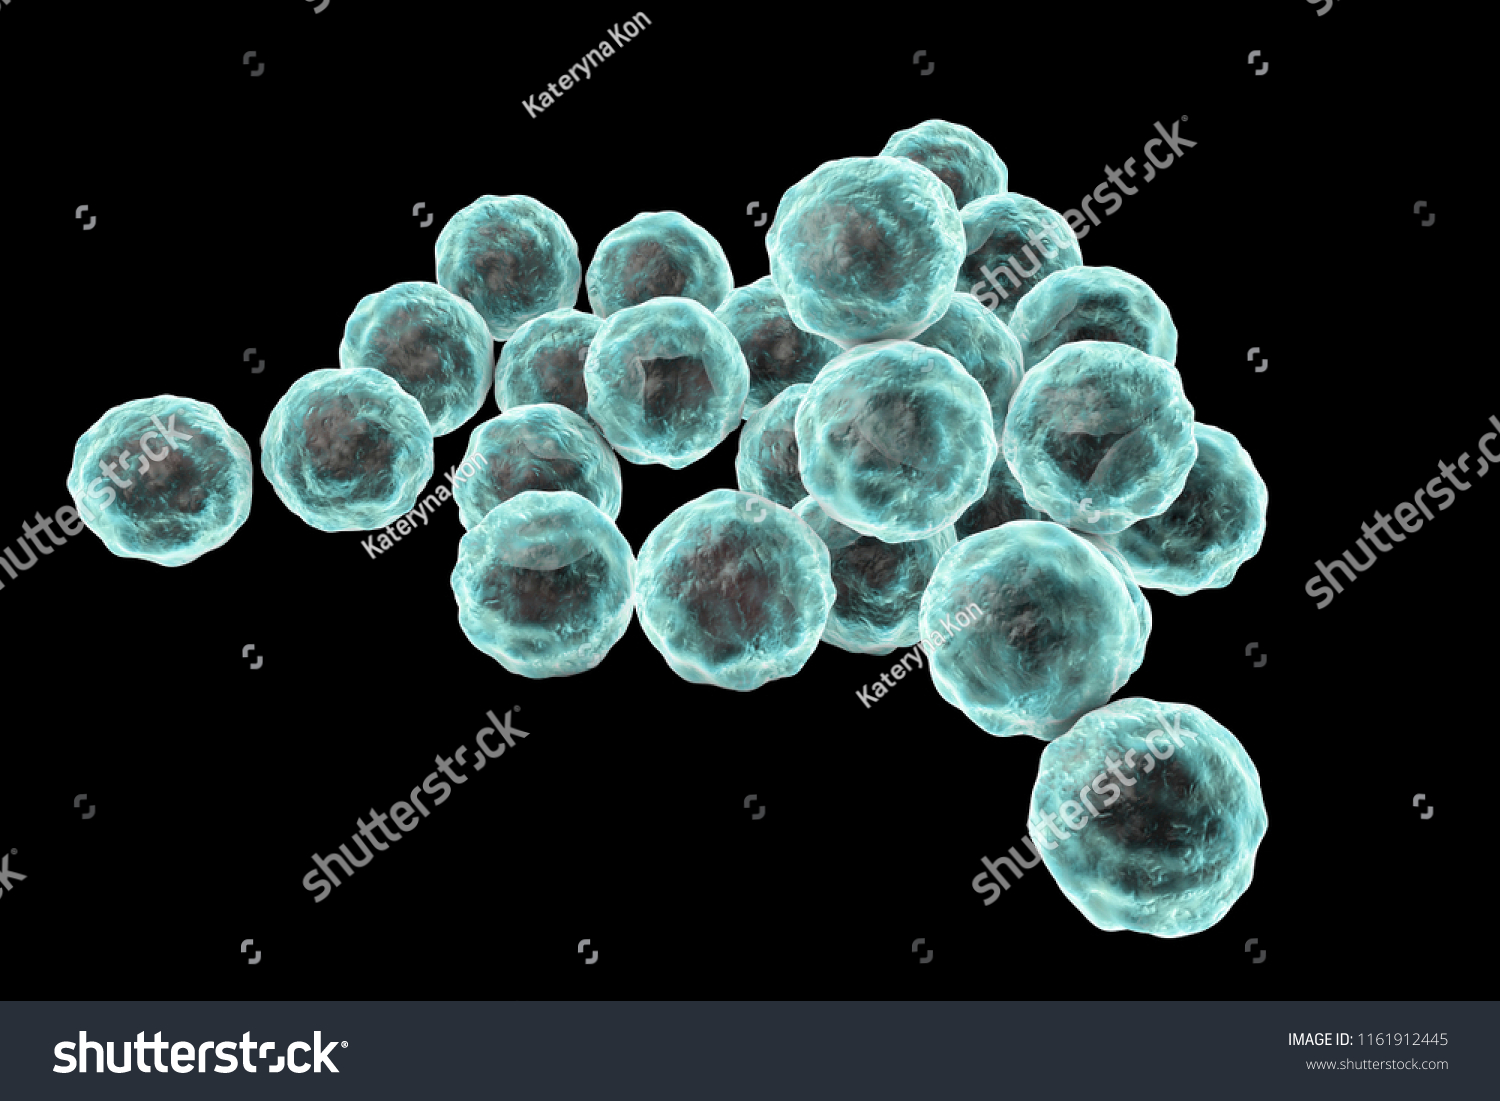 Chlamydia Trachomatis Bacteria 3d Illustration Causative Stock Illustration 1161912445 3179